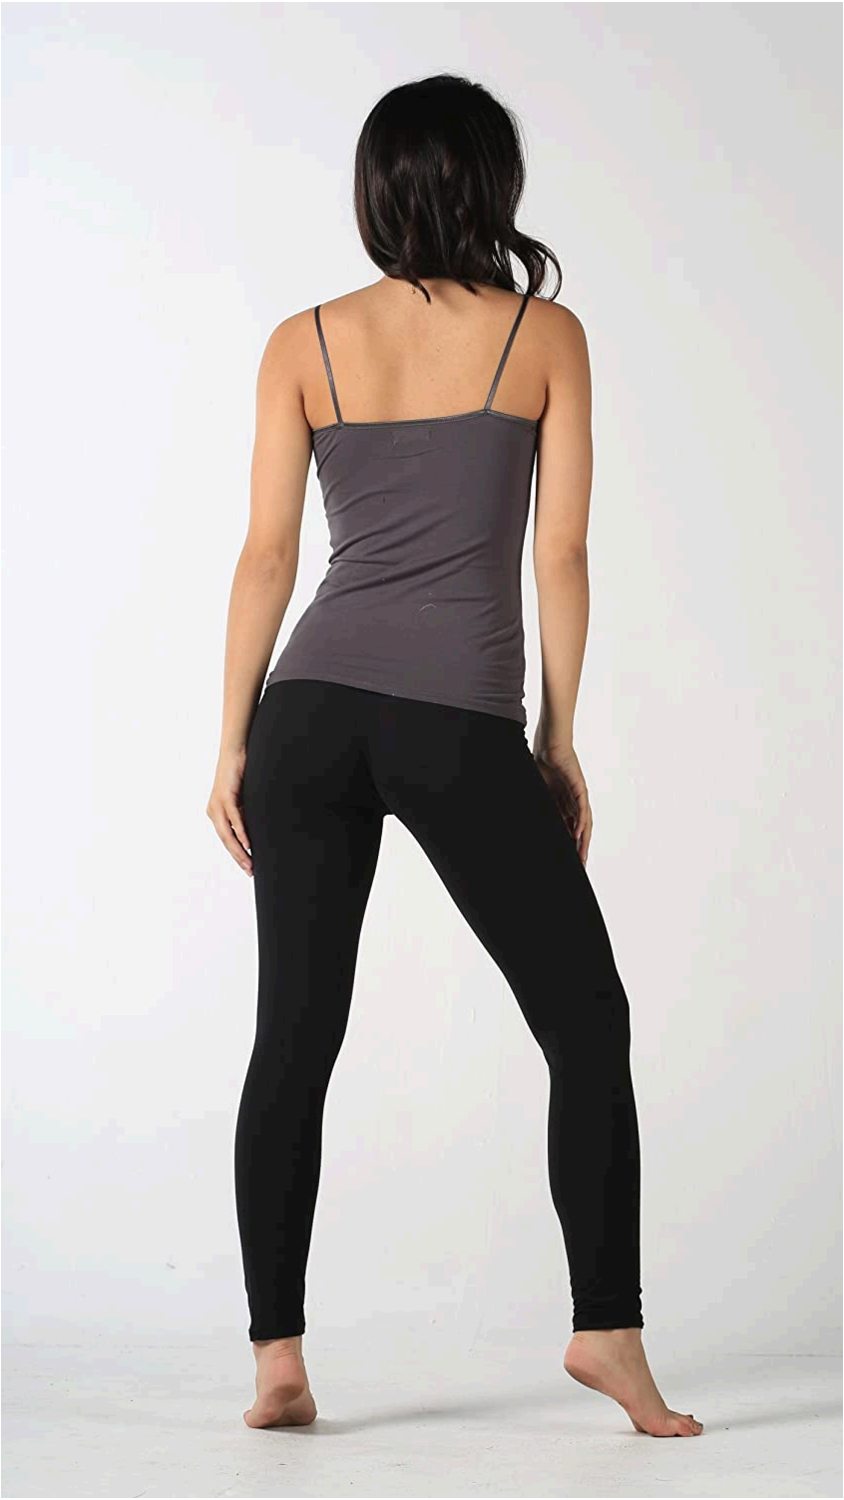 Fengbay High Waist Yoga Pants, Yoga Pants Tummy Control, Black, Size X-Large